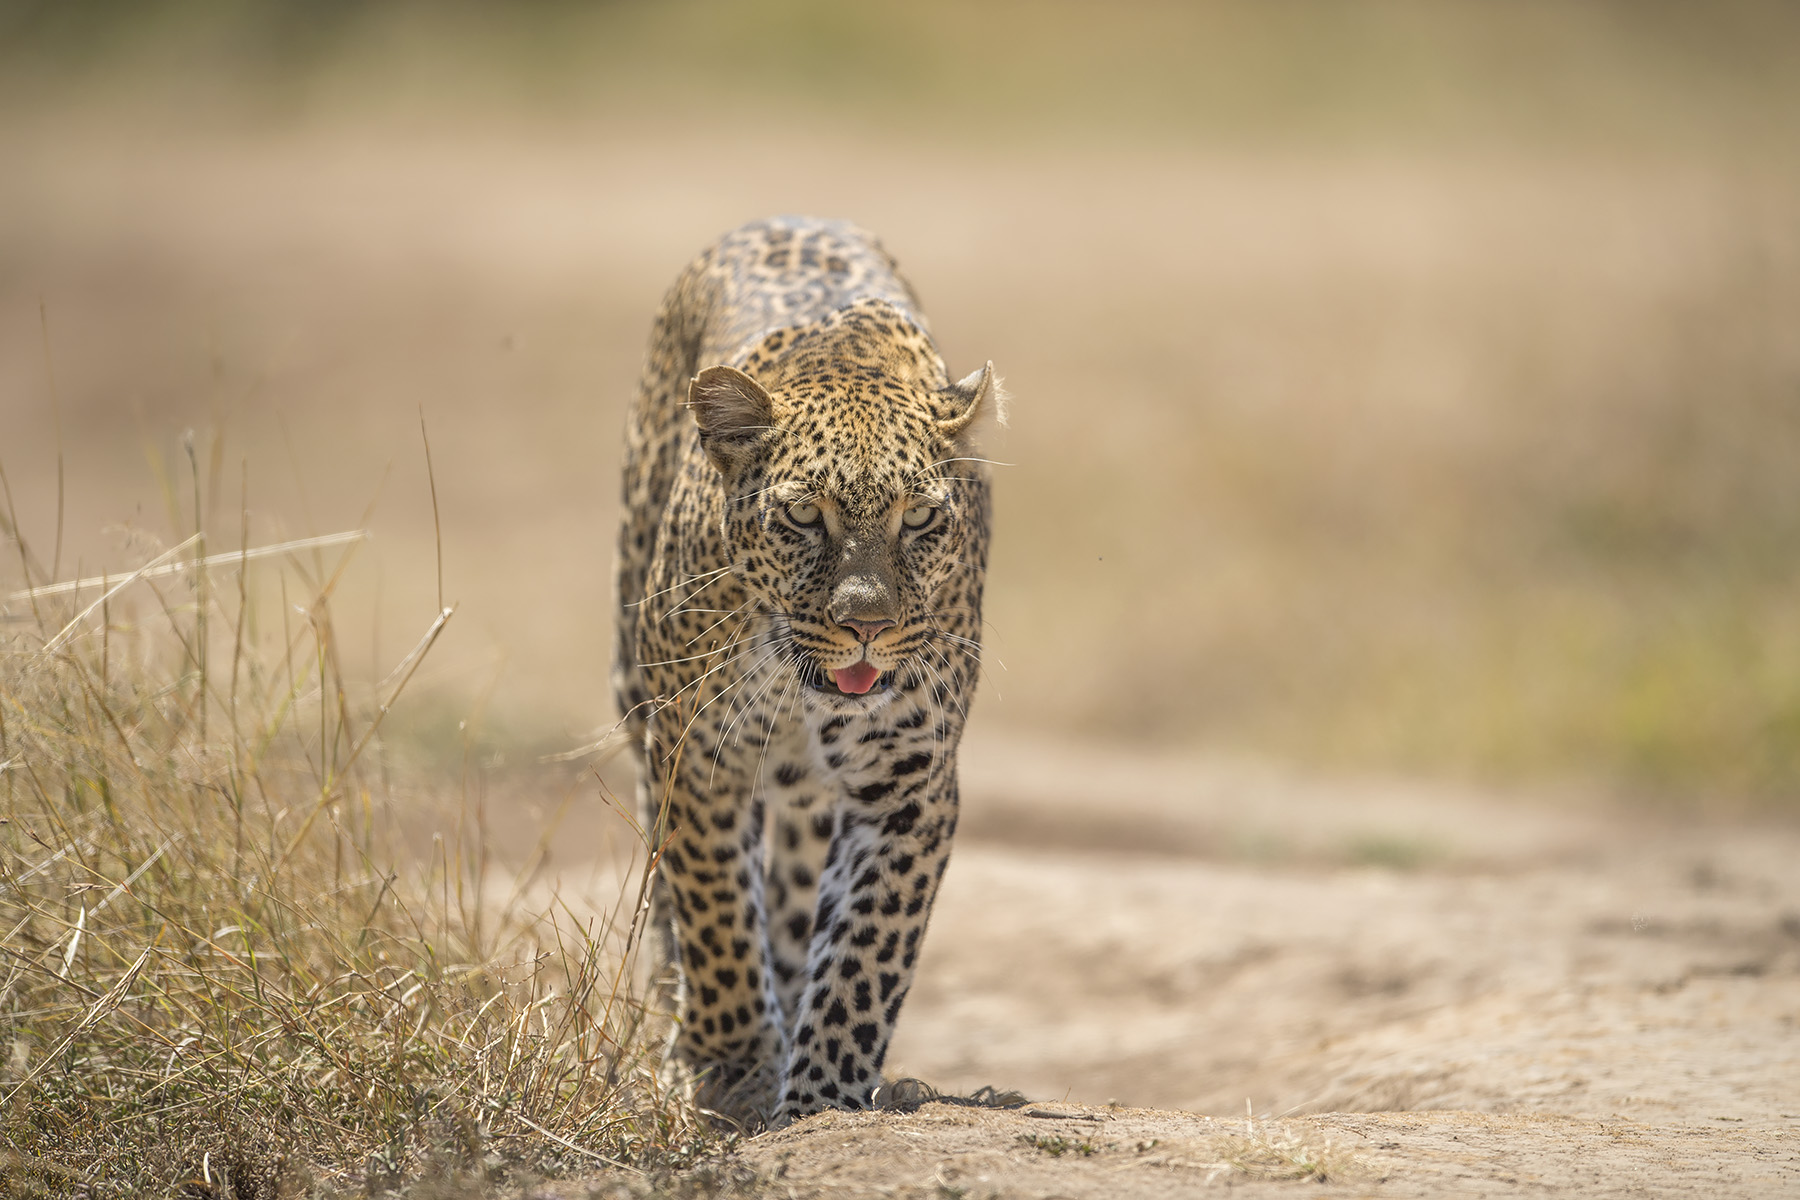 Leopard during Kenya wildlife safari experience